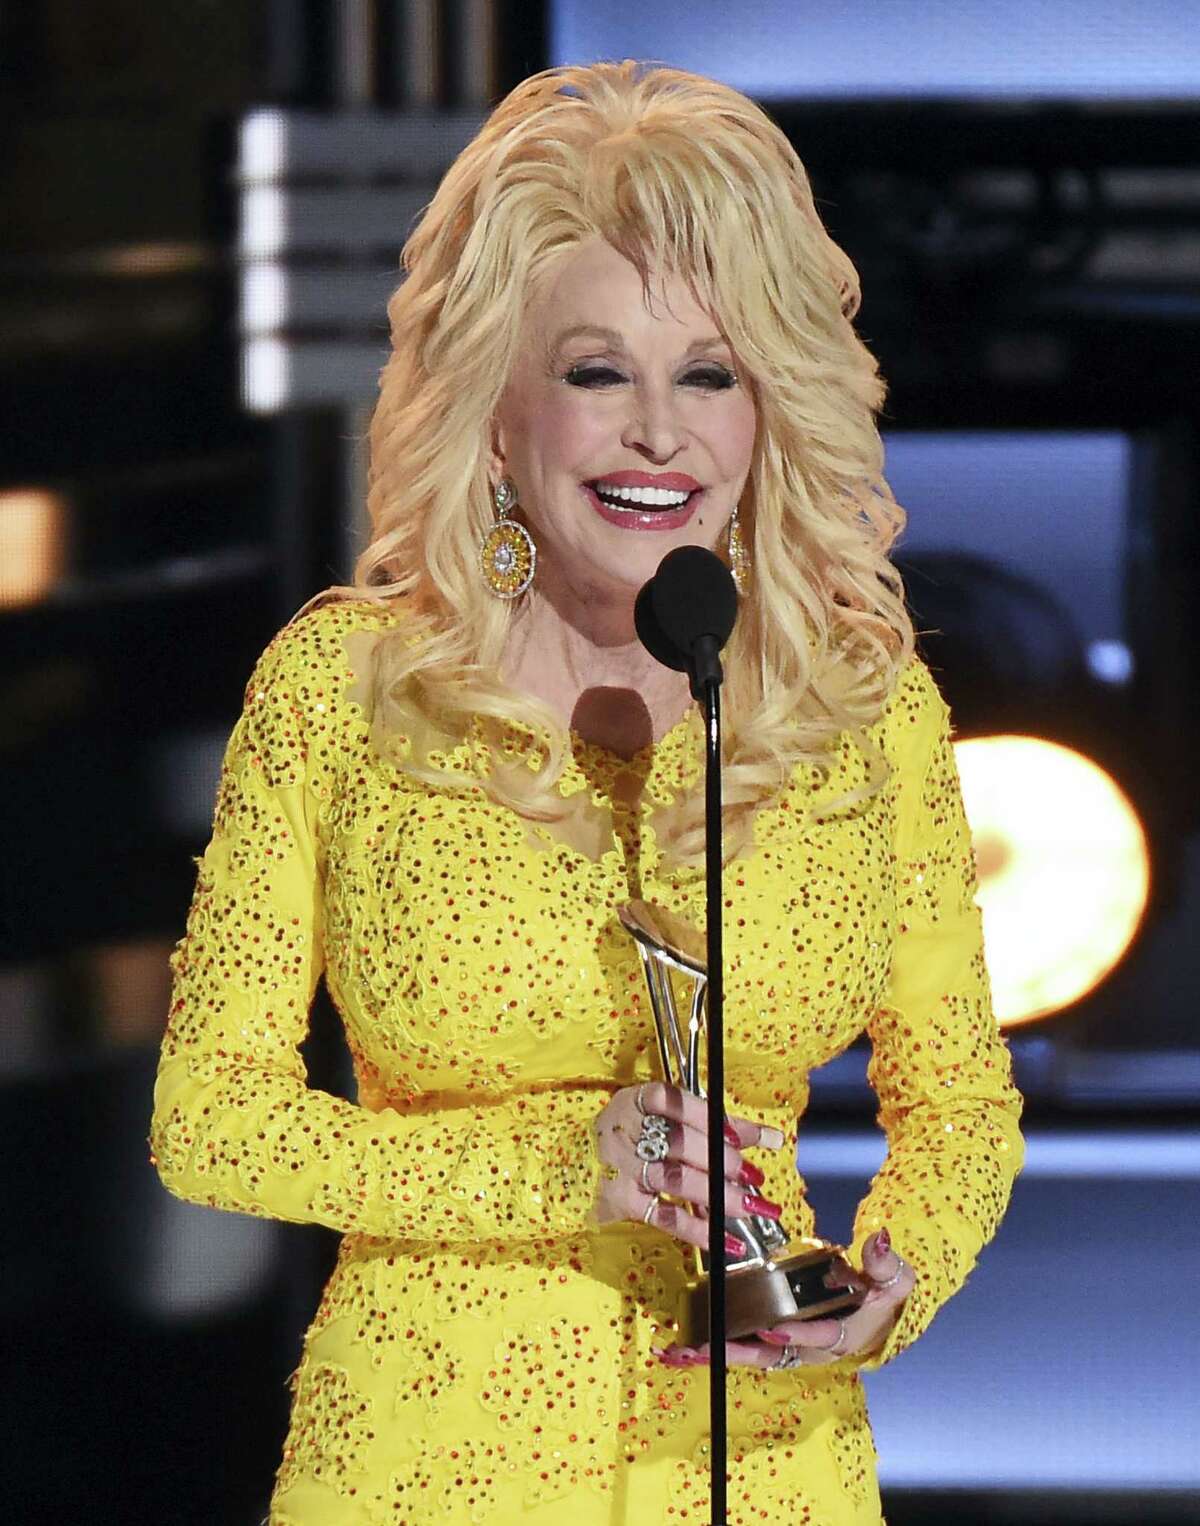 Dolly Parton accepts the Willie Nelson Lifetime Achievement Award at the 50th annual CMA Awards at the Bridgestone Arena on Nov. 2, 2016 in Nashville, Tenn.